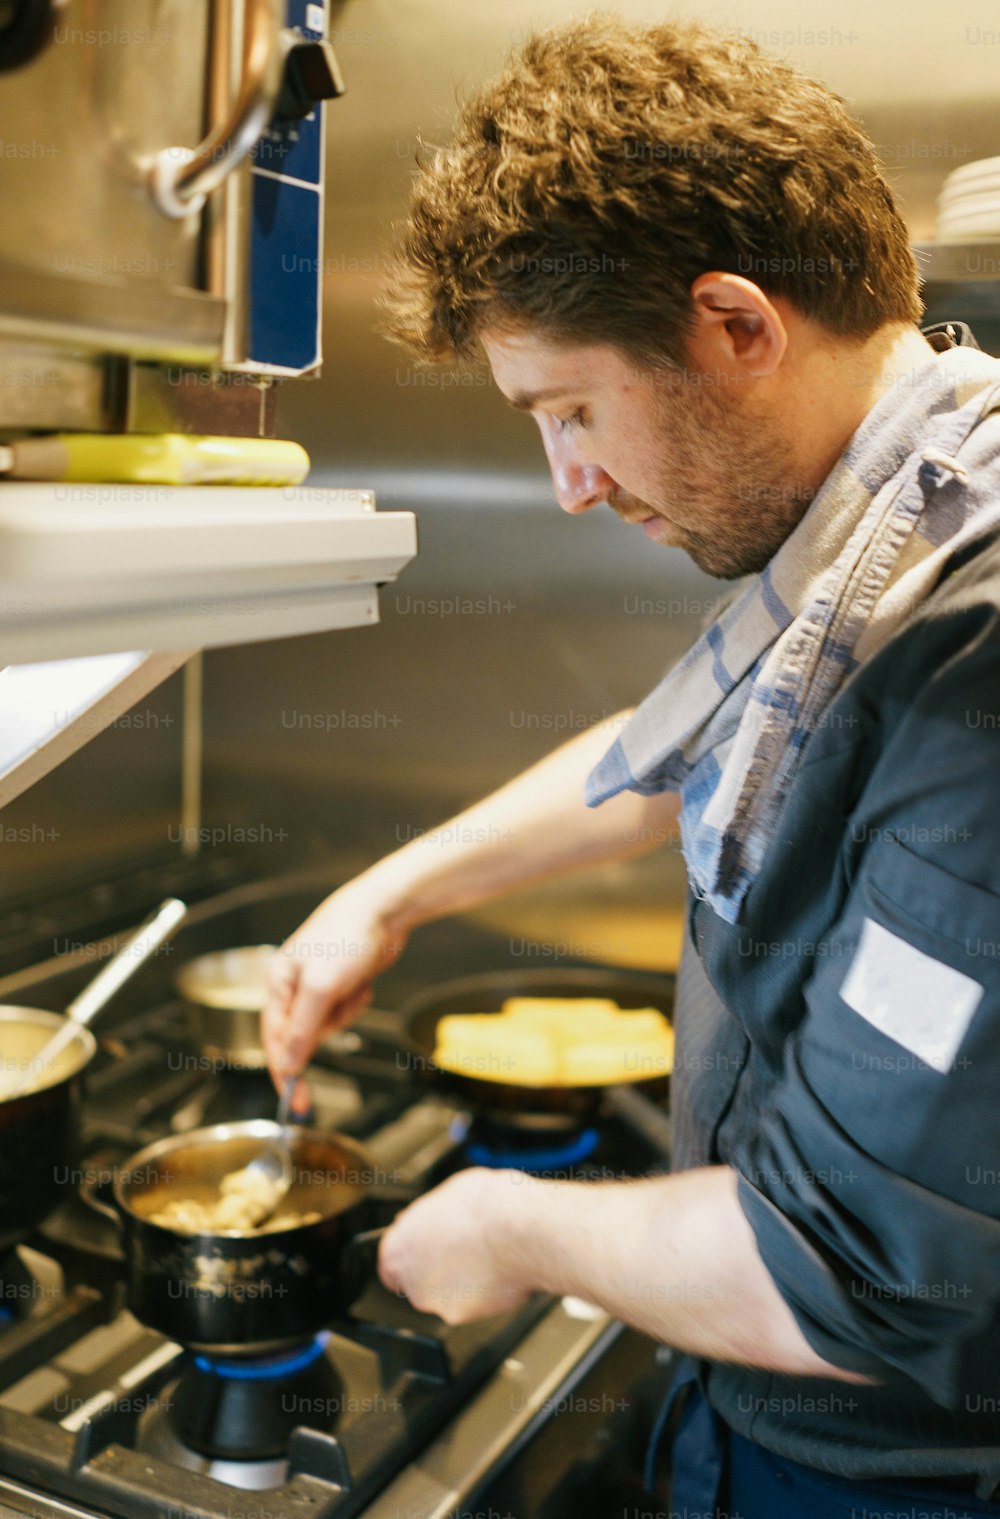 Un uomo che cucina su una stufa in una cucina